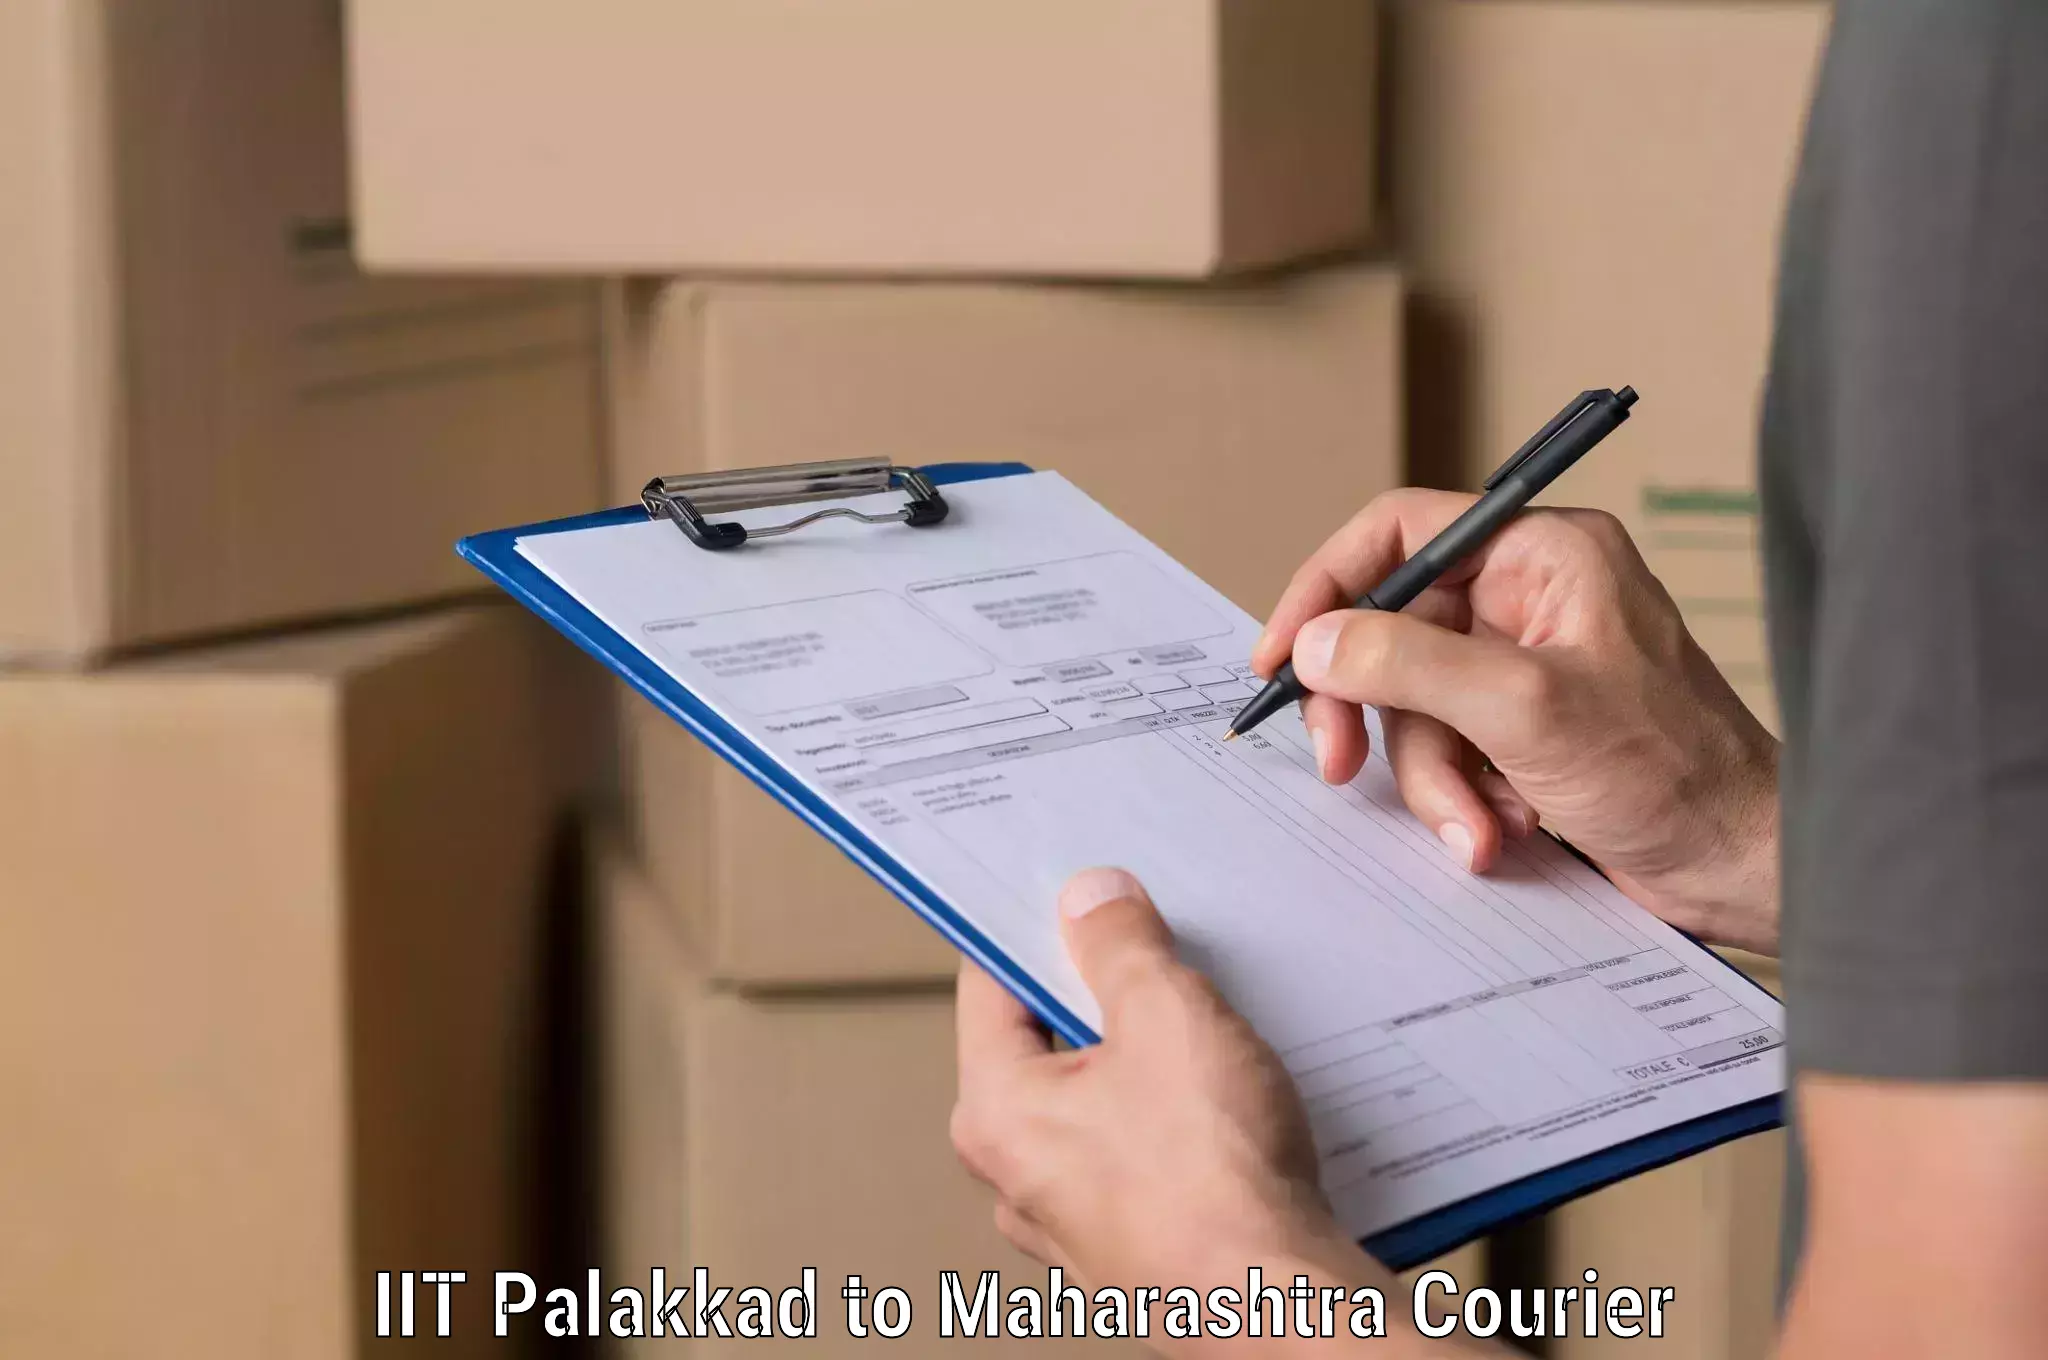 Budget-friendly shipping IIT Palakkad to Mahabaleshwar